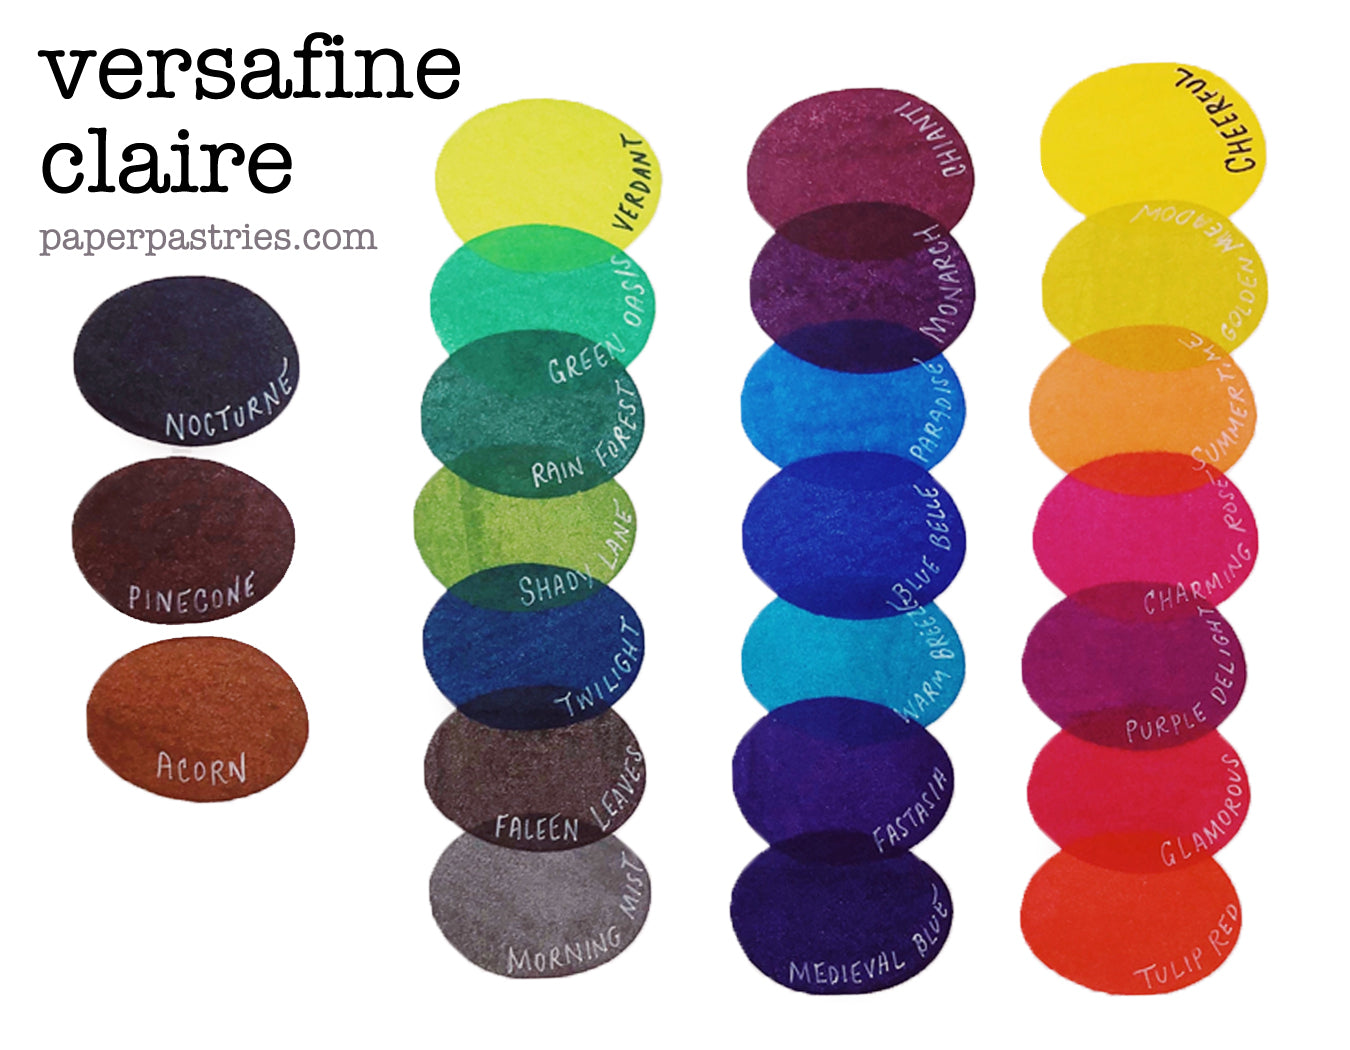 VersaFine and VersaFine Clair Pigment Ink